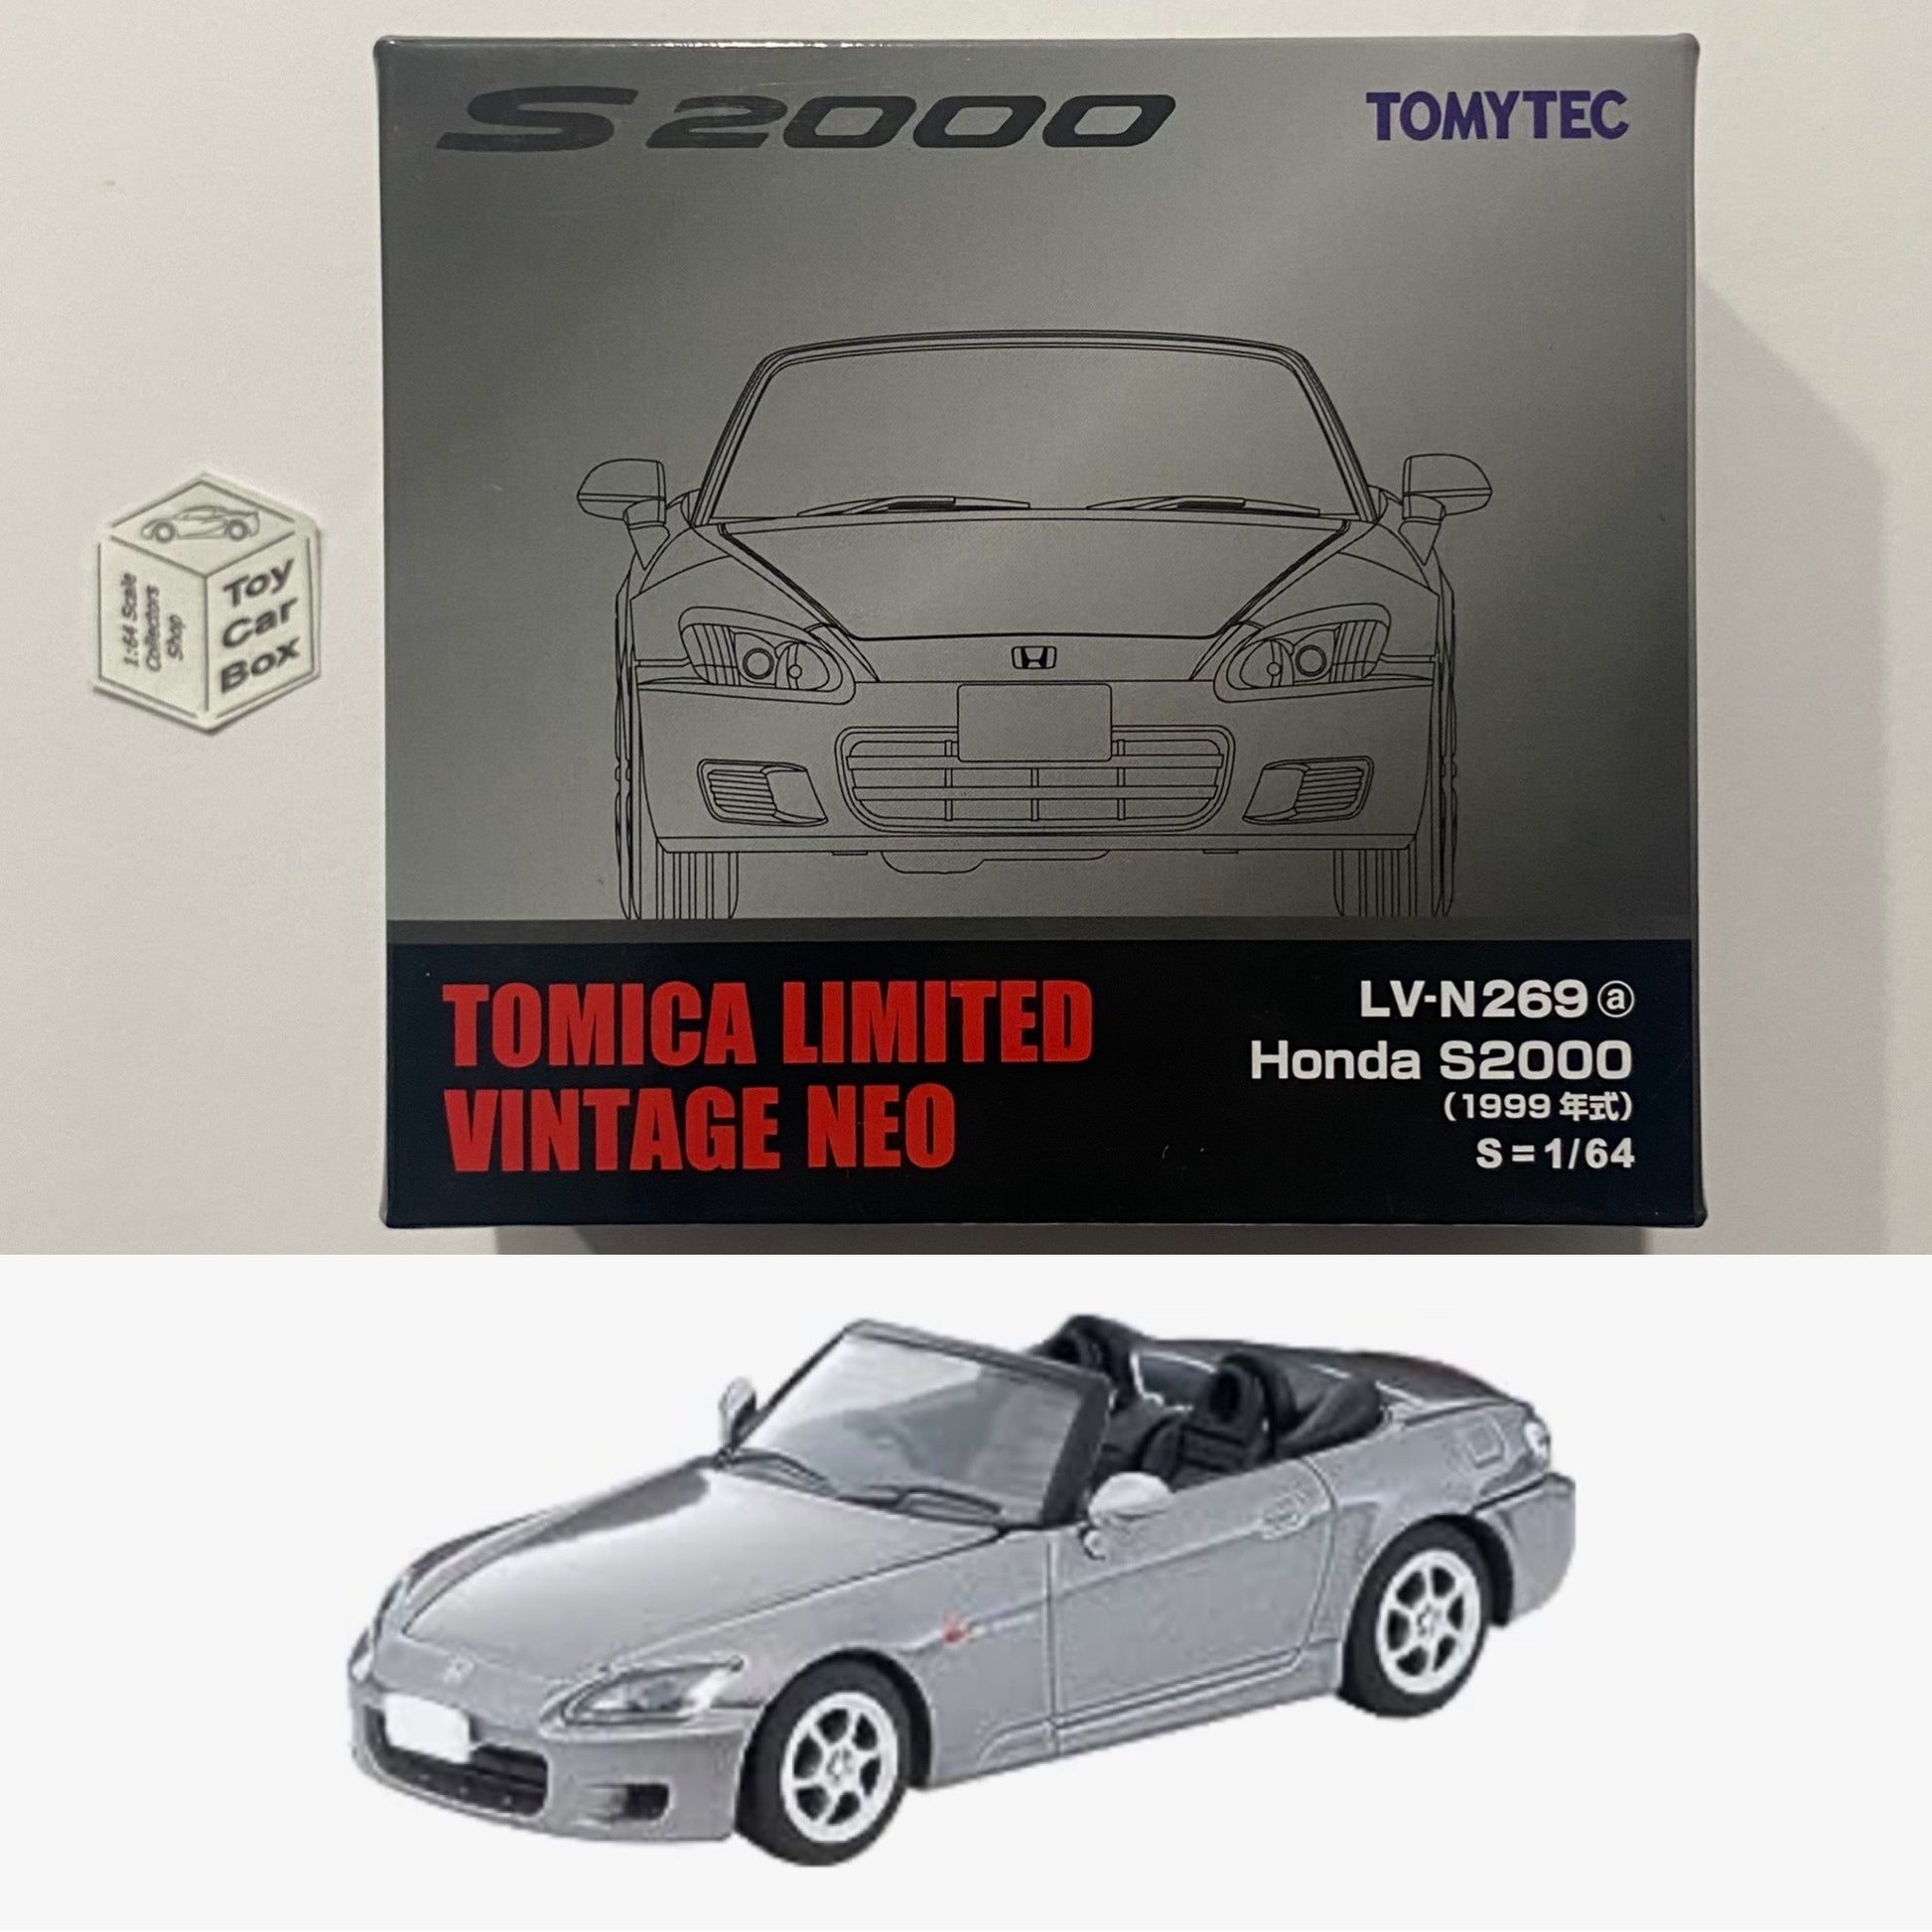 Tomica Limited Vintage Neo